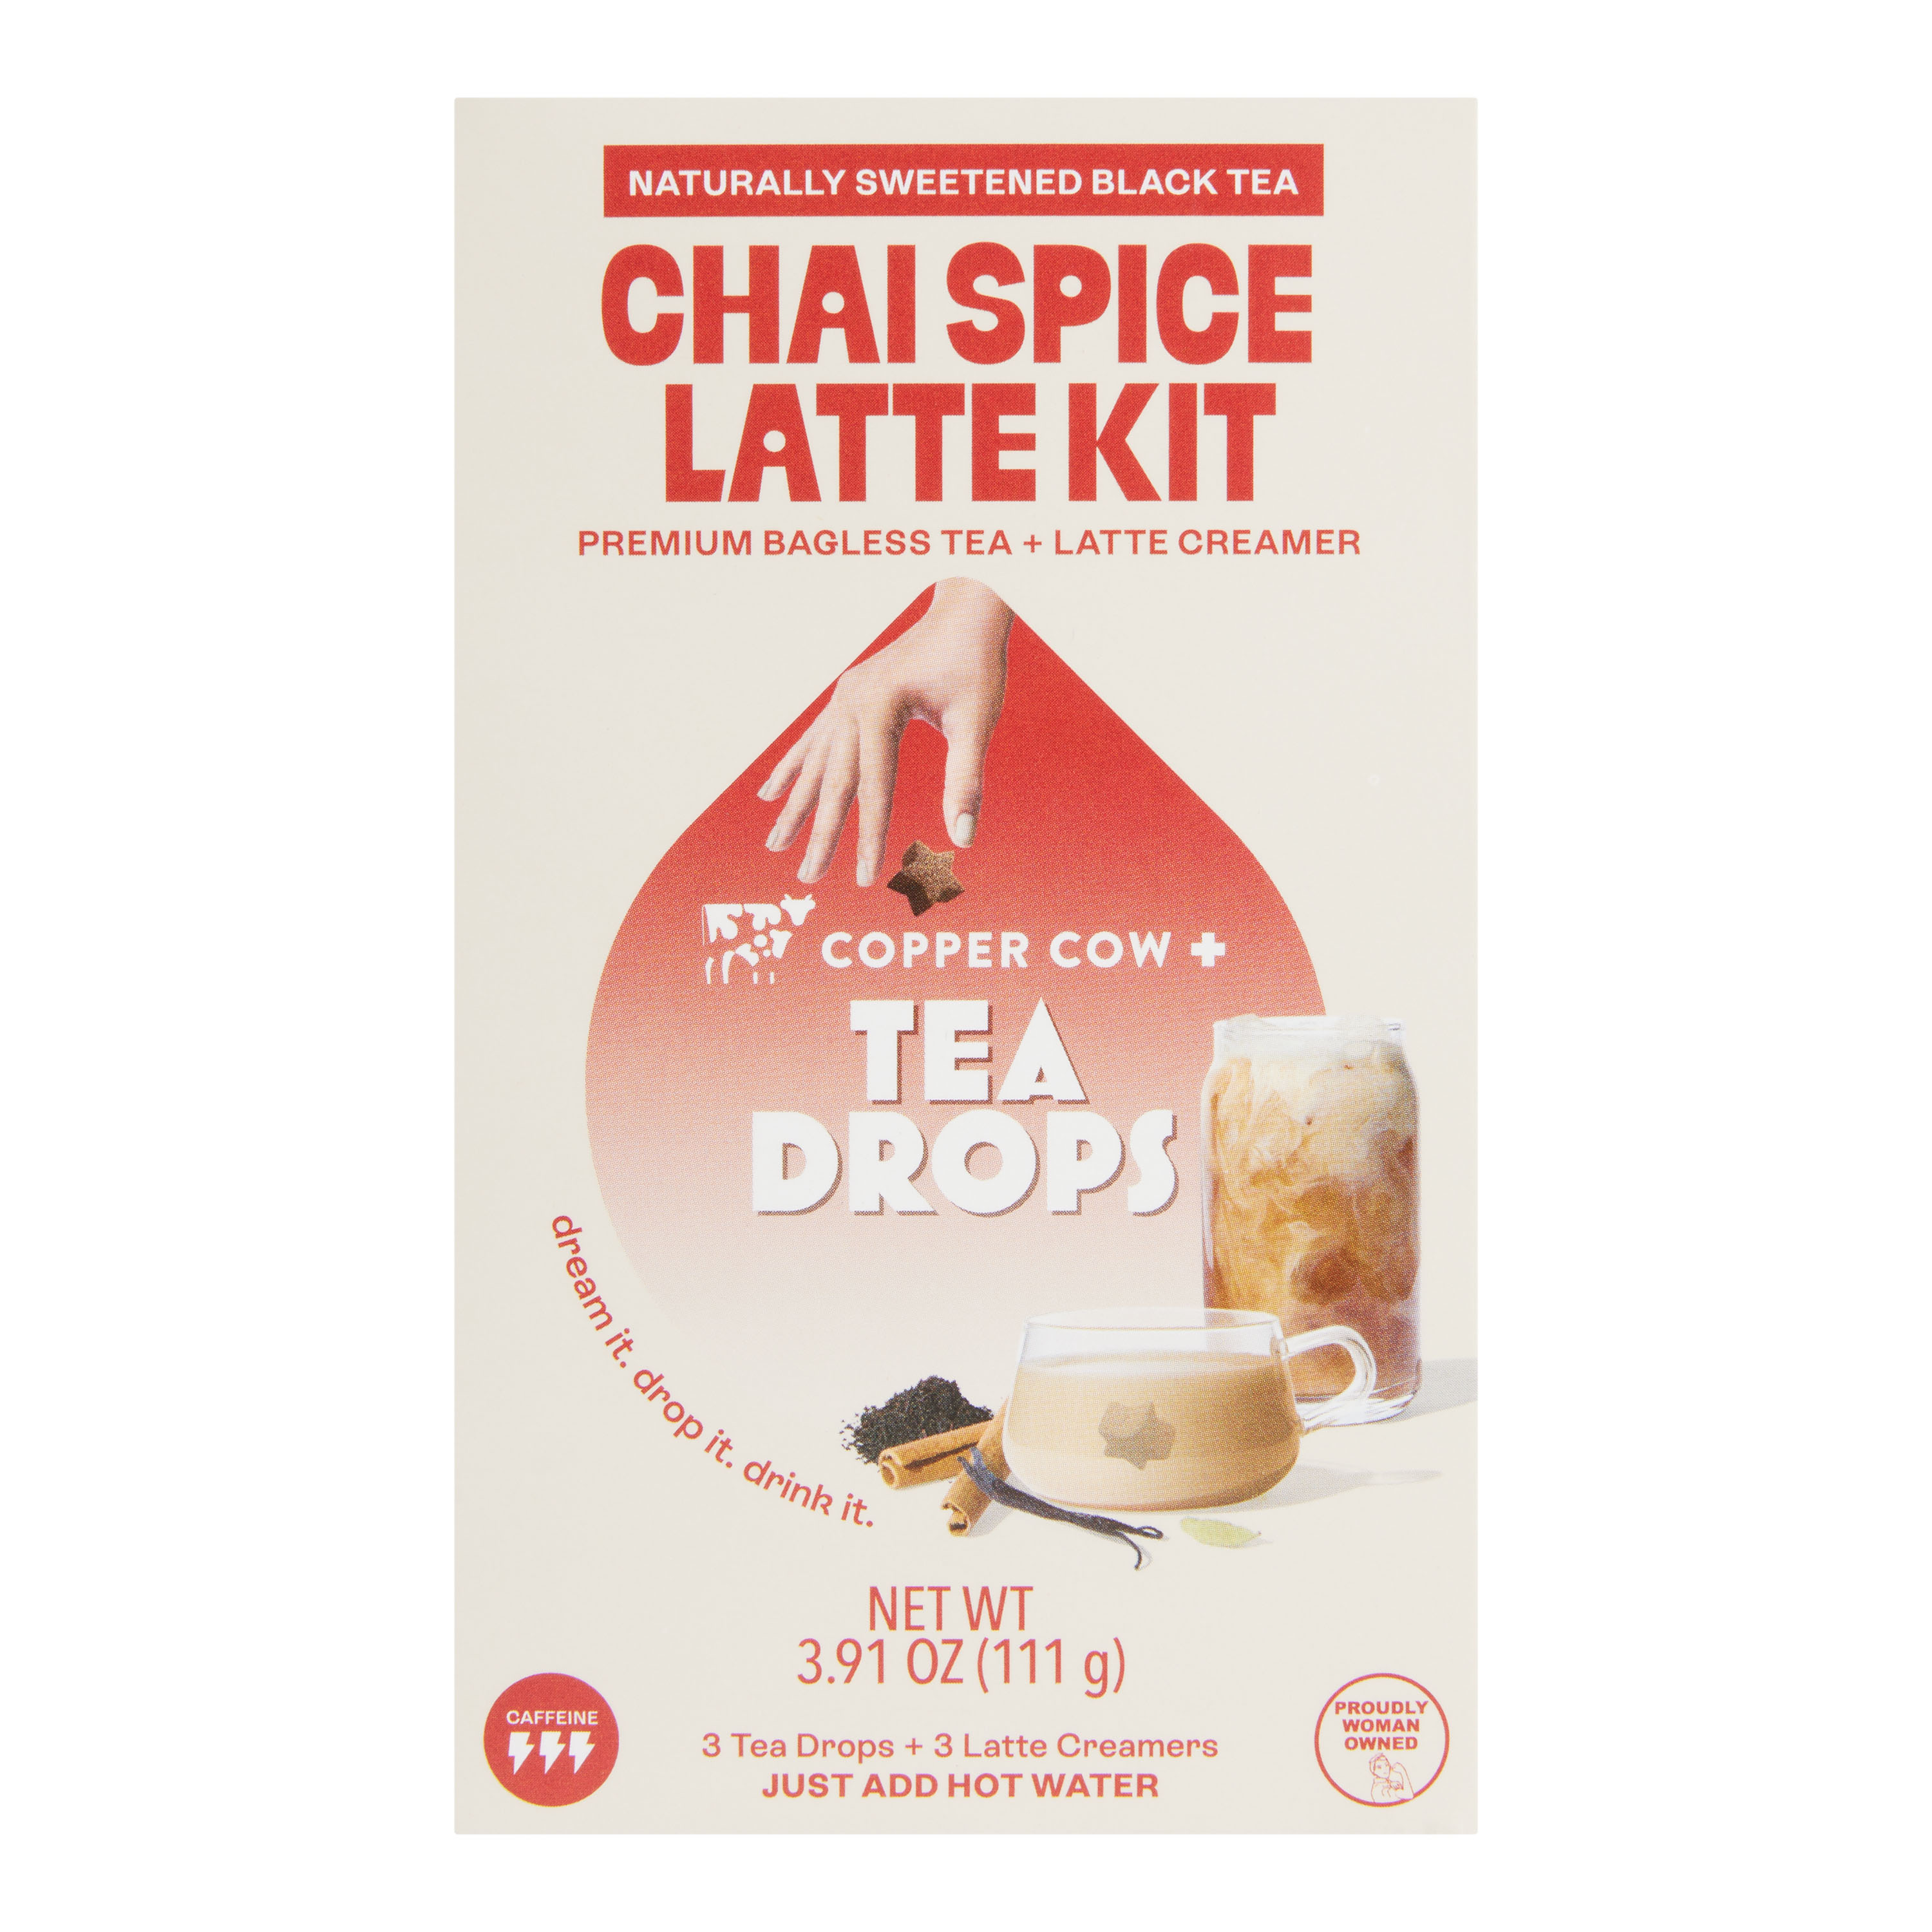 Tea Drops & Copper Cow Ube Latte Kit - World Market